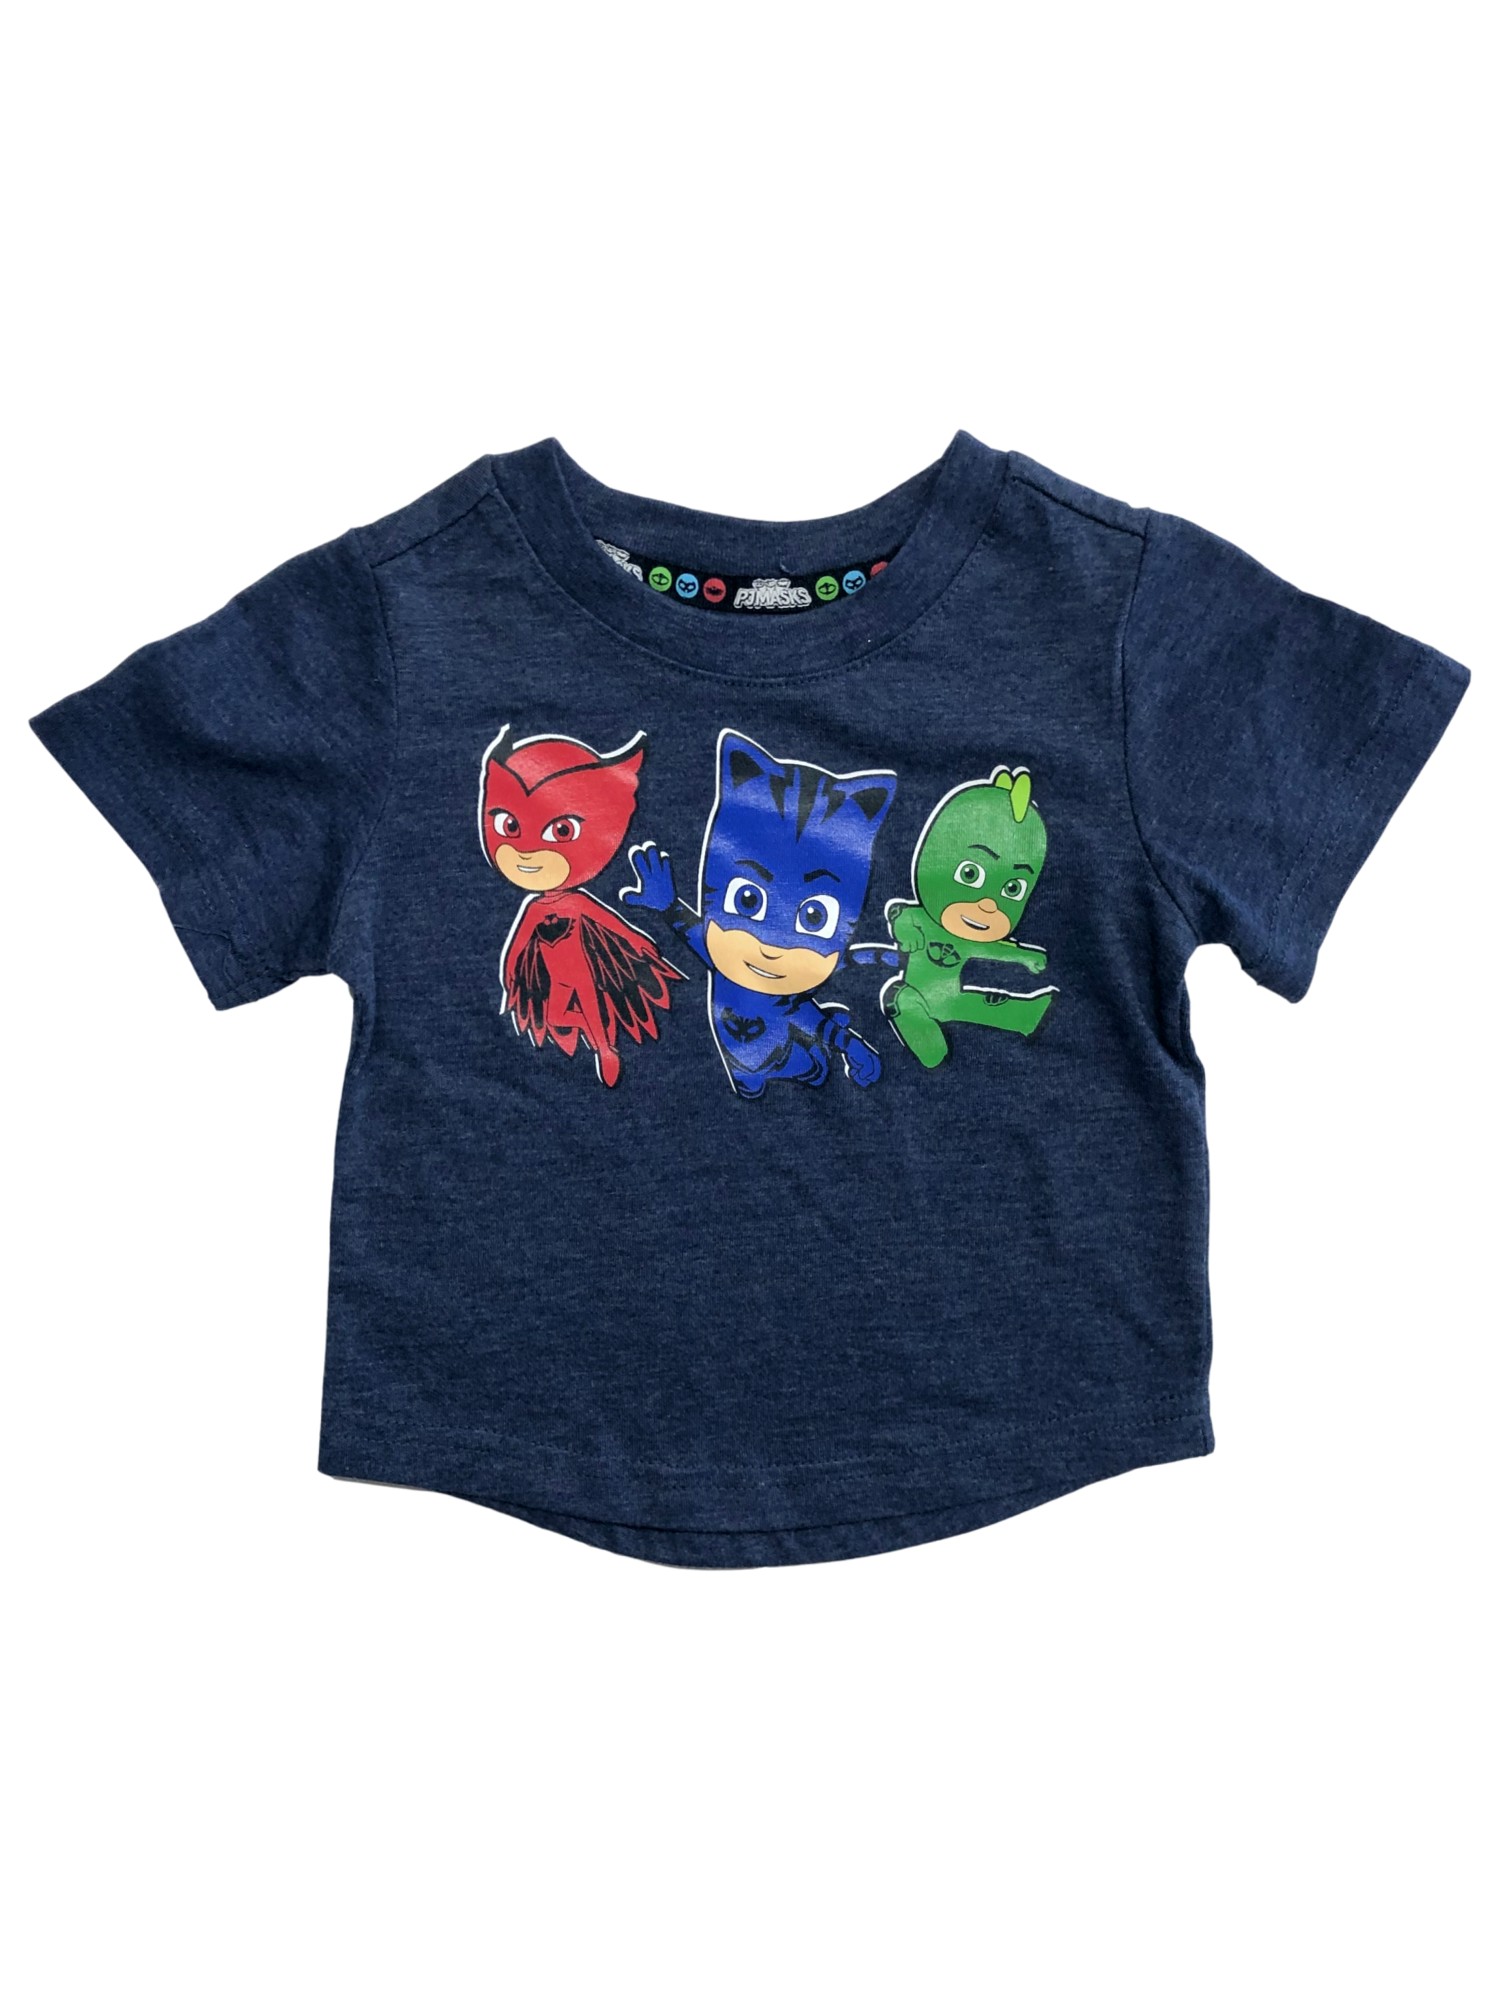 PJ Masks Infant Boys Short Sleeve Navy Blue T-Shirt Tee Shirt